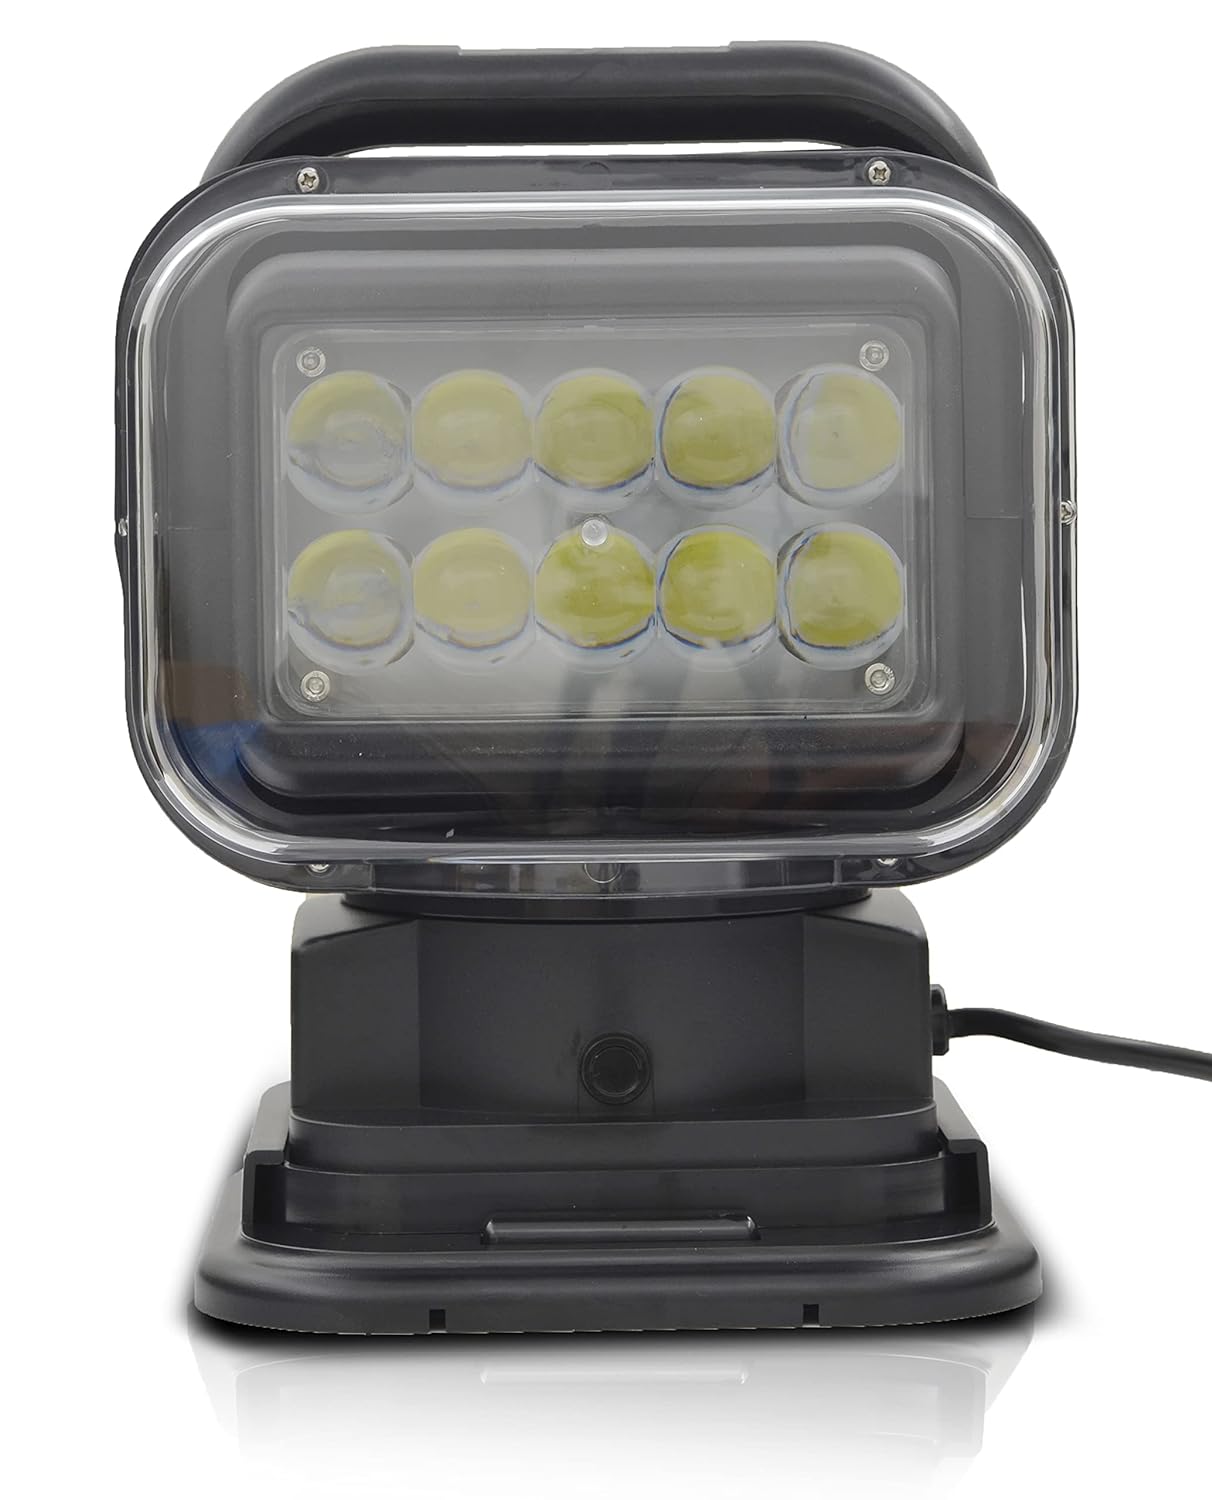 SALE格安[2台セット] リモコン式 LED サーチライト 50W LEDライト 12V 360度首振 船舶 重機 漁船 サーチライト LED 照明 作業灯 投光器 集魚灯 防水 作業用照明一般